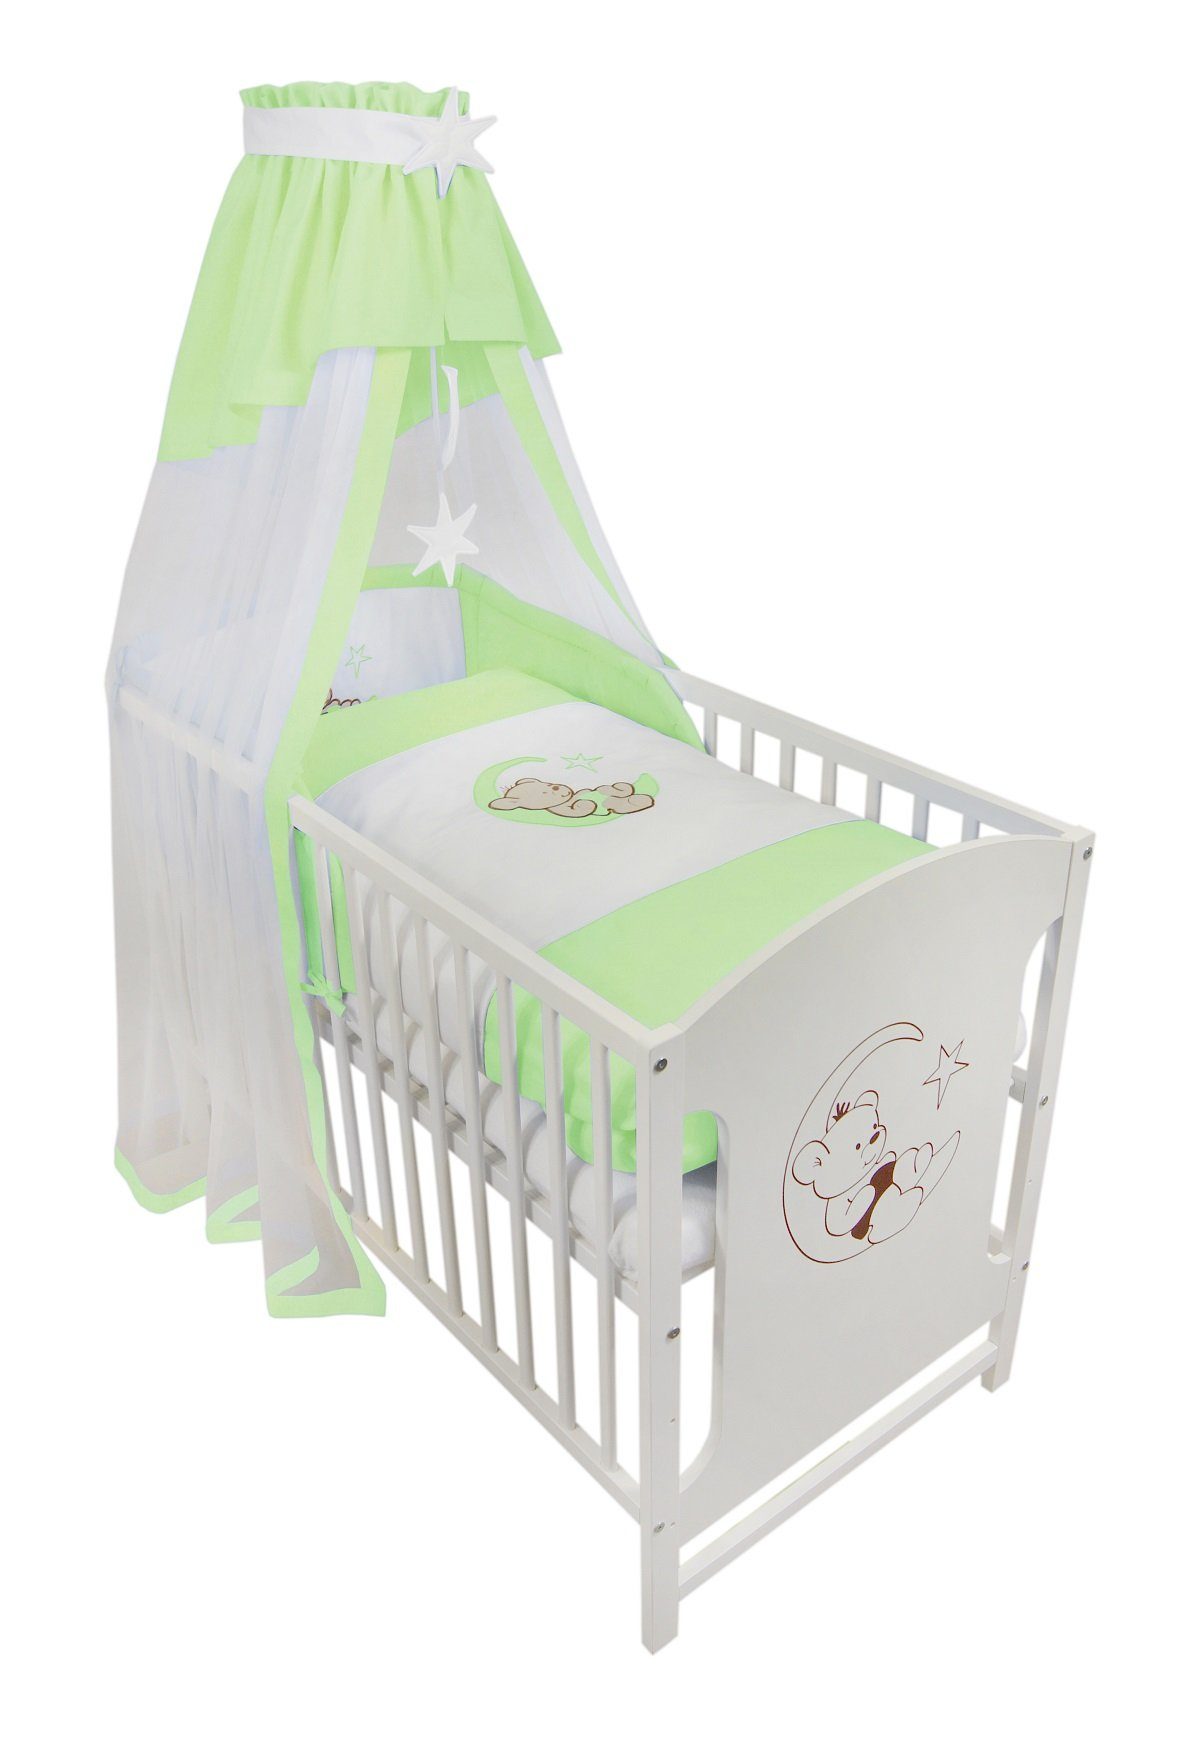 Babyhafen Komplettbett 60 × 120 cm Babybett Teddy auf dem Mond Gitterbett Kinderbett, inkl. Matratze, Himmel, Nestchen & Bettwäsche